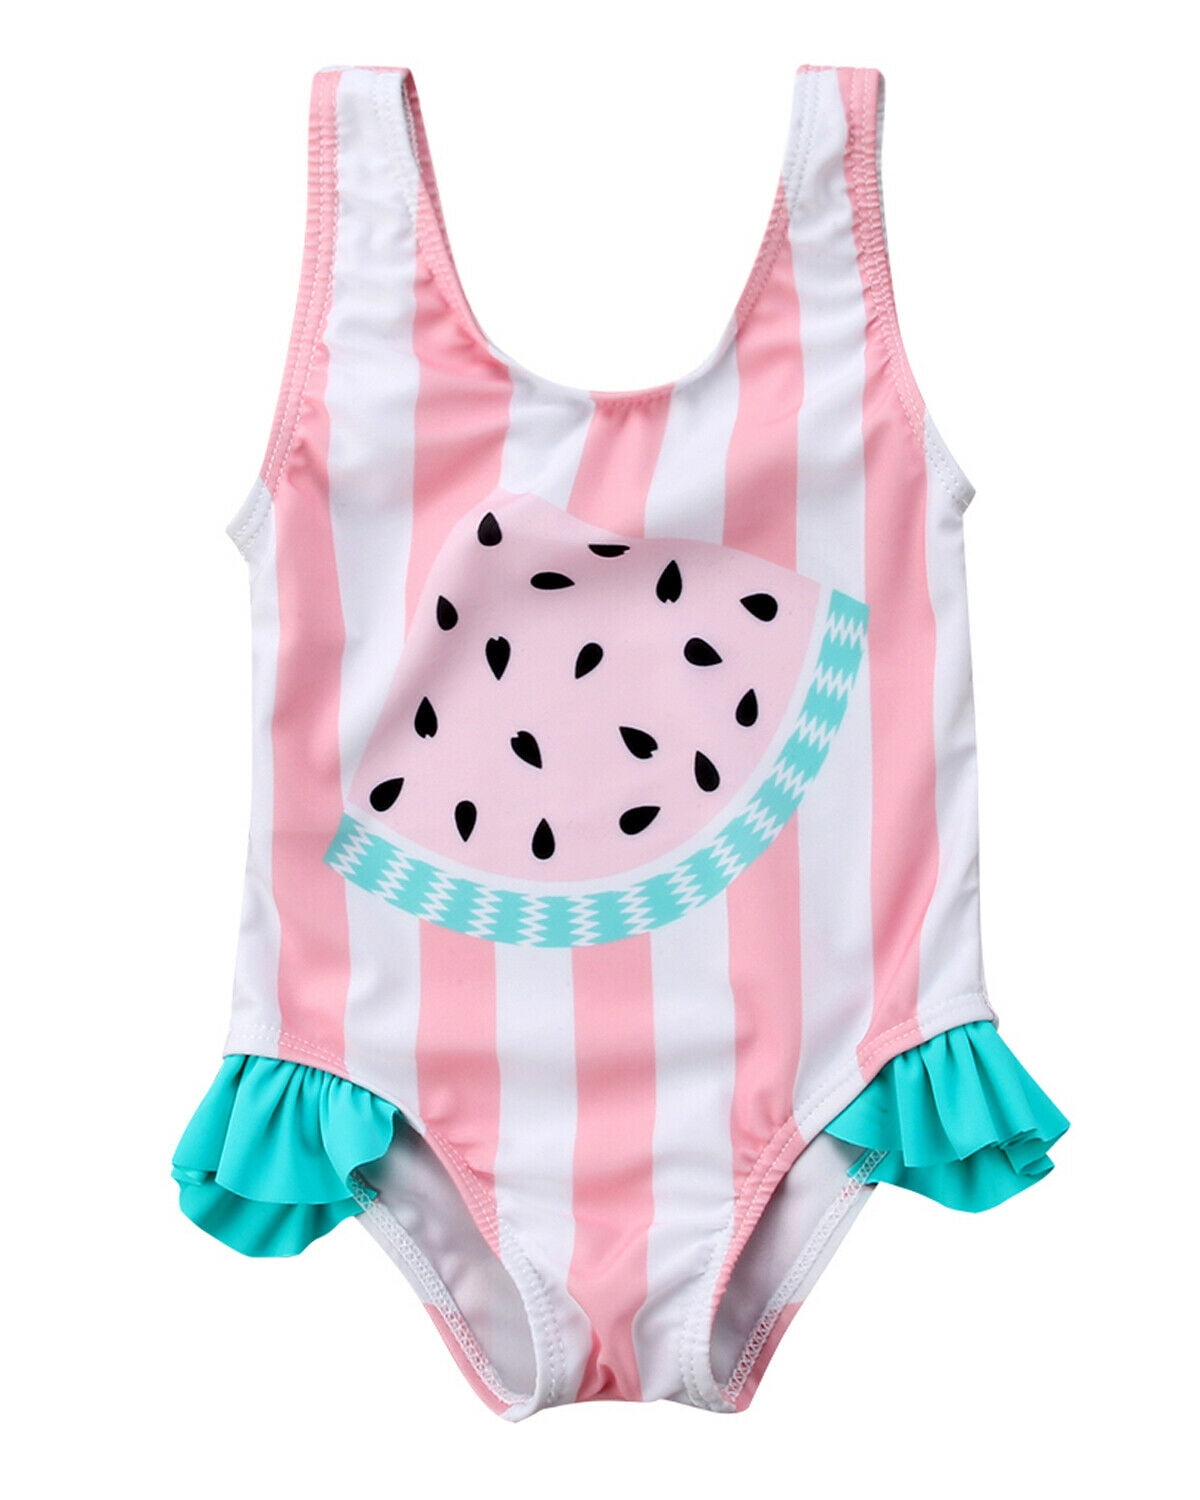 HUAANIUE Baby Girls Shortsleeve One Piece Zipper Swimsuit 6Month-3Year UPF 50 Sun Protection Swimming Costume 